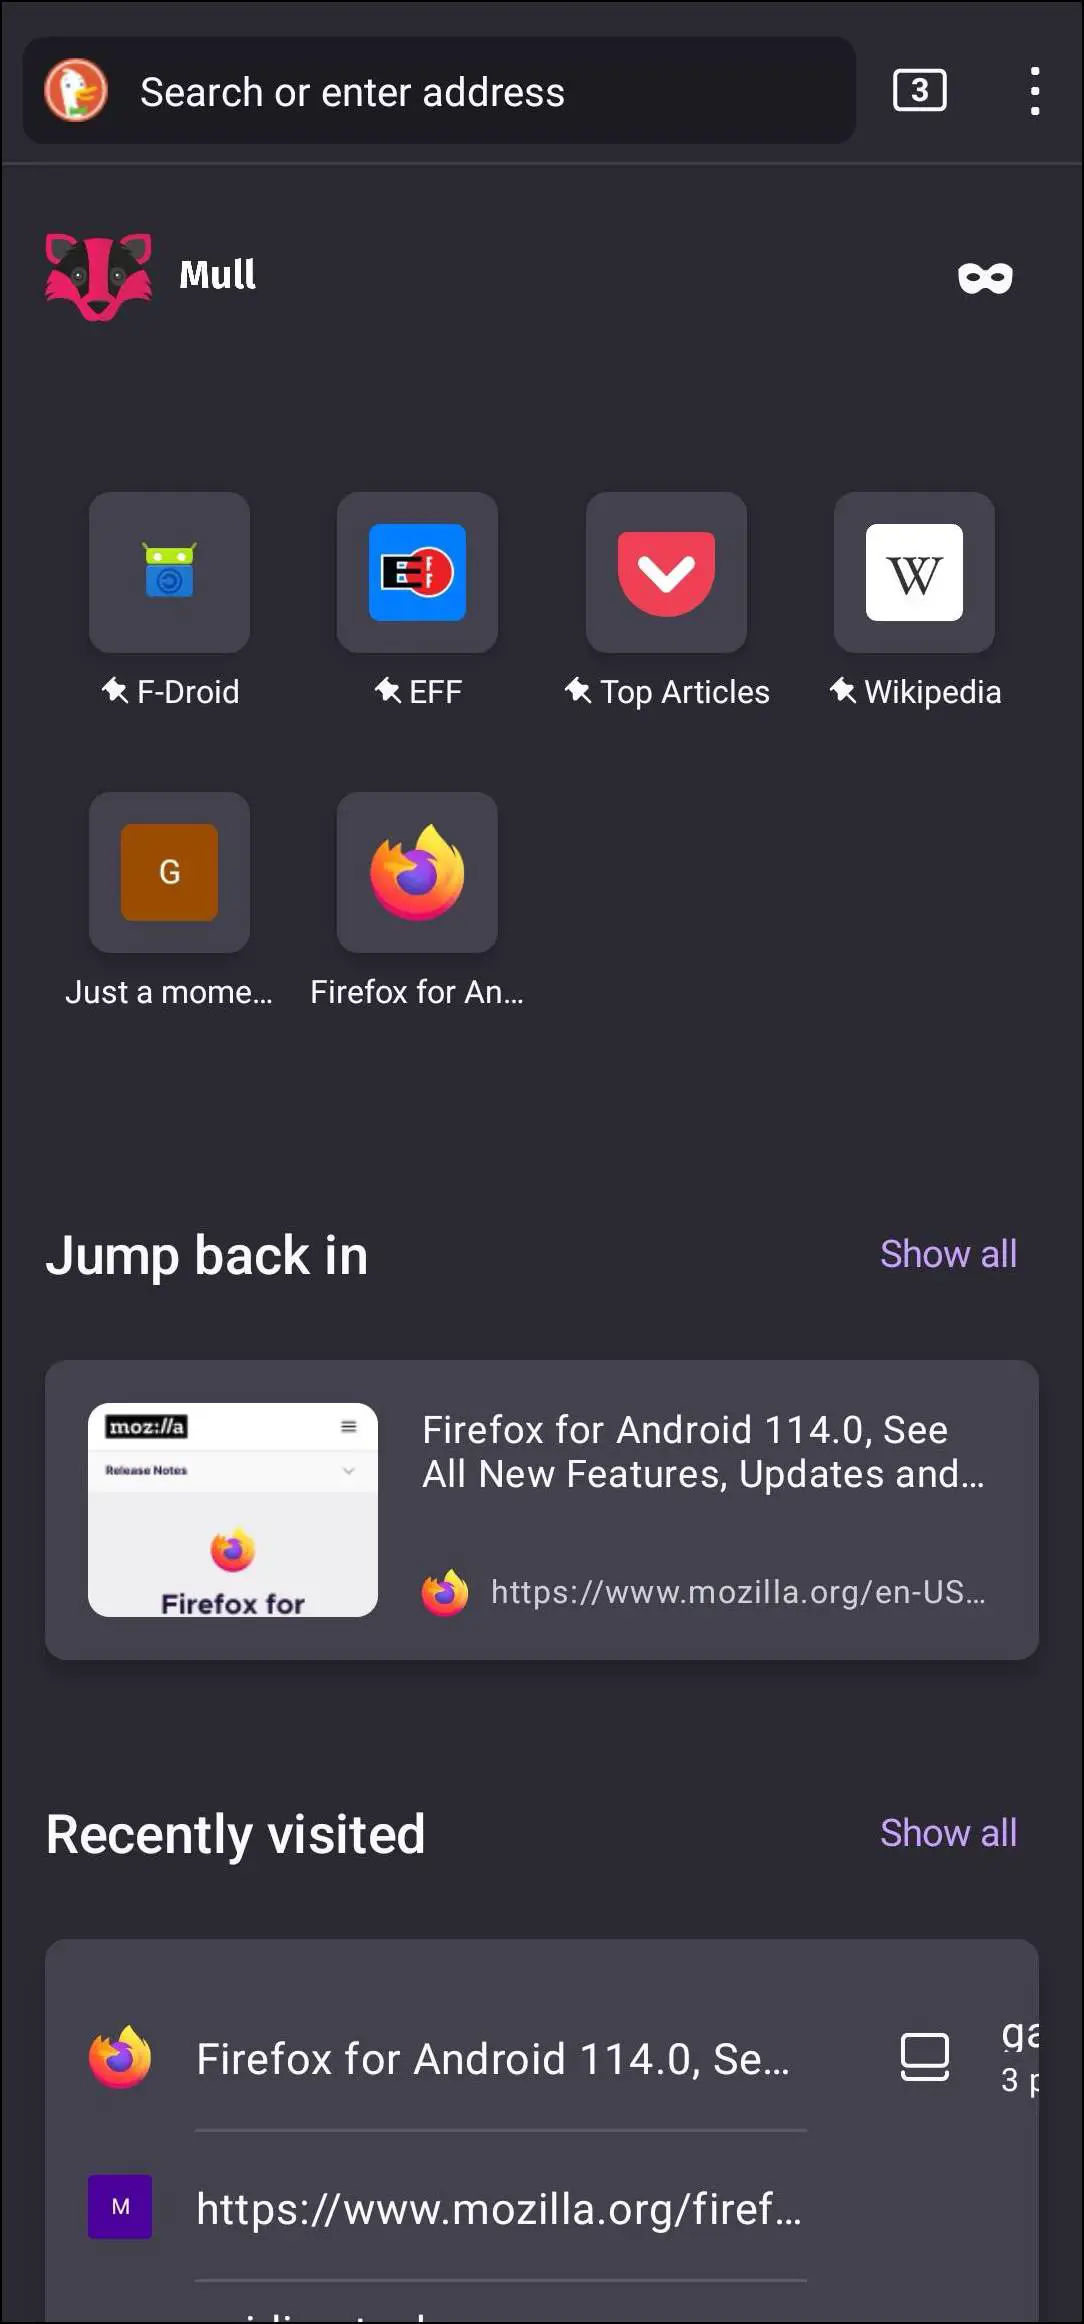 Mull-Browser-Firefox-Alternative